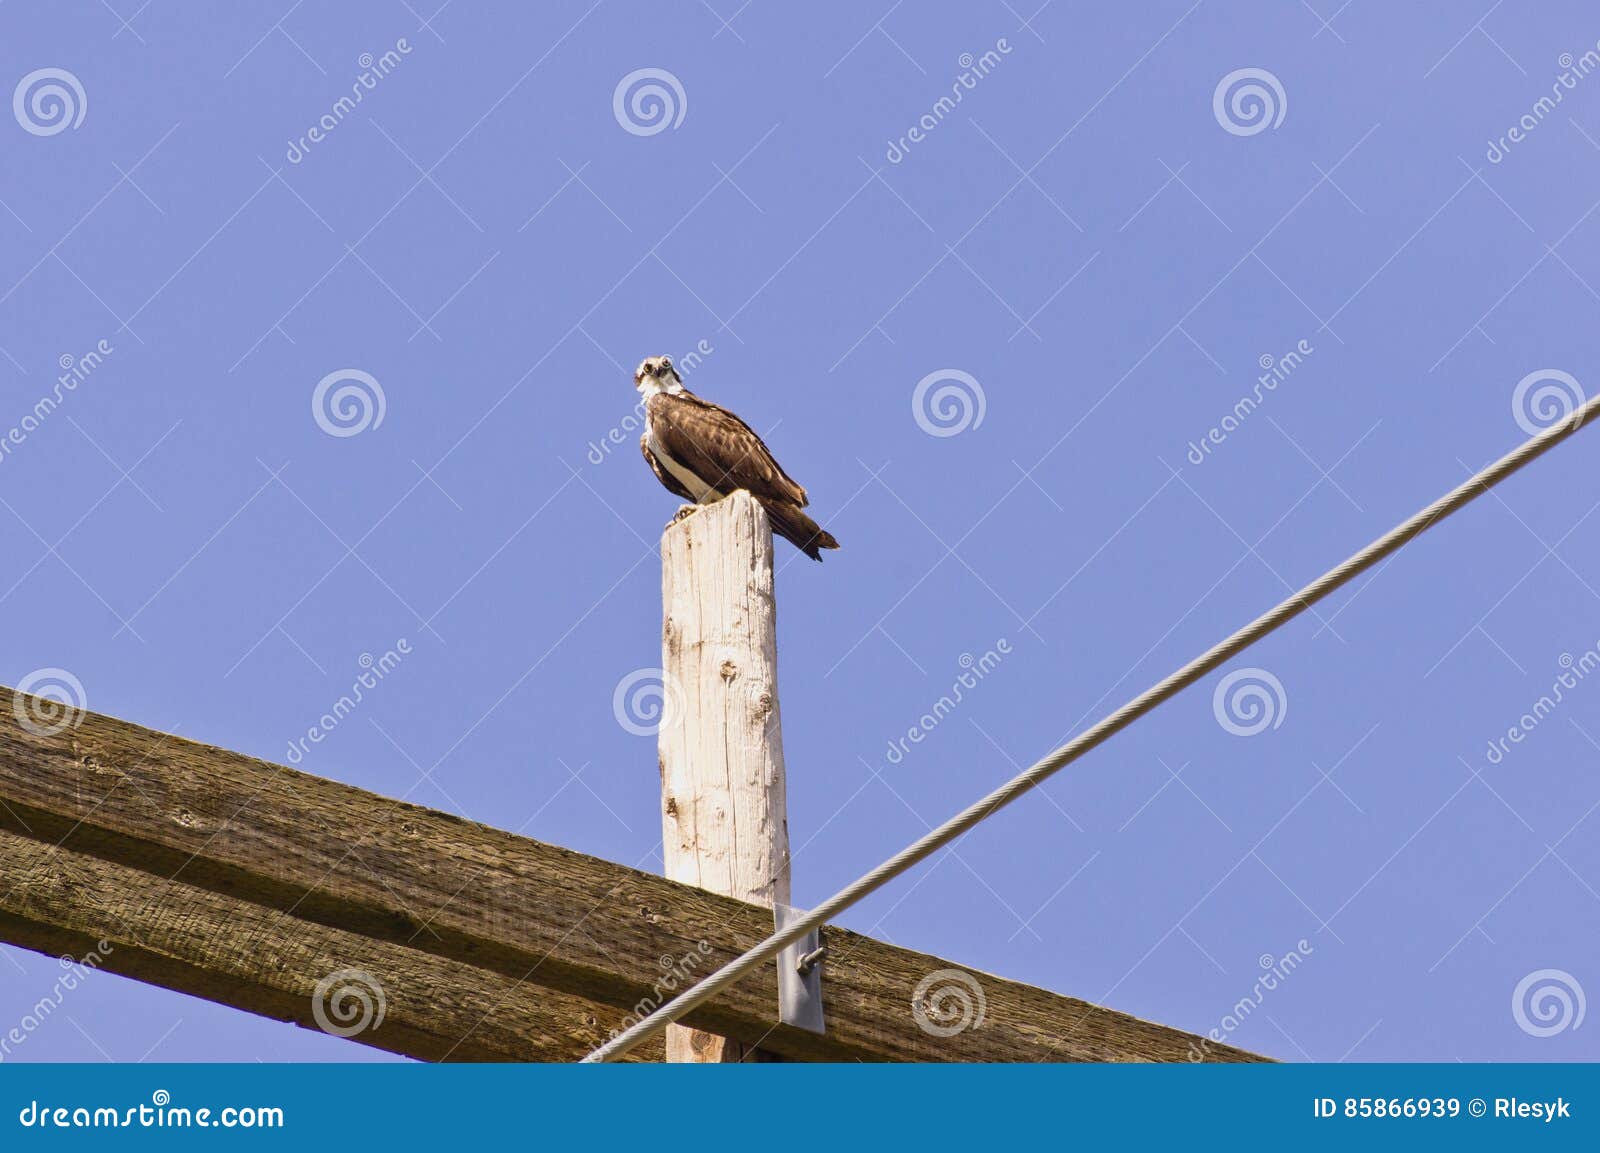 Osprey on a utility pole stock image. Image of pole, perched - 85866939